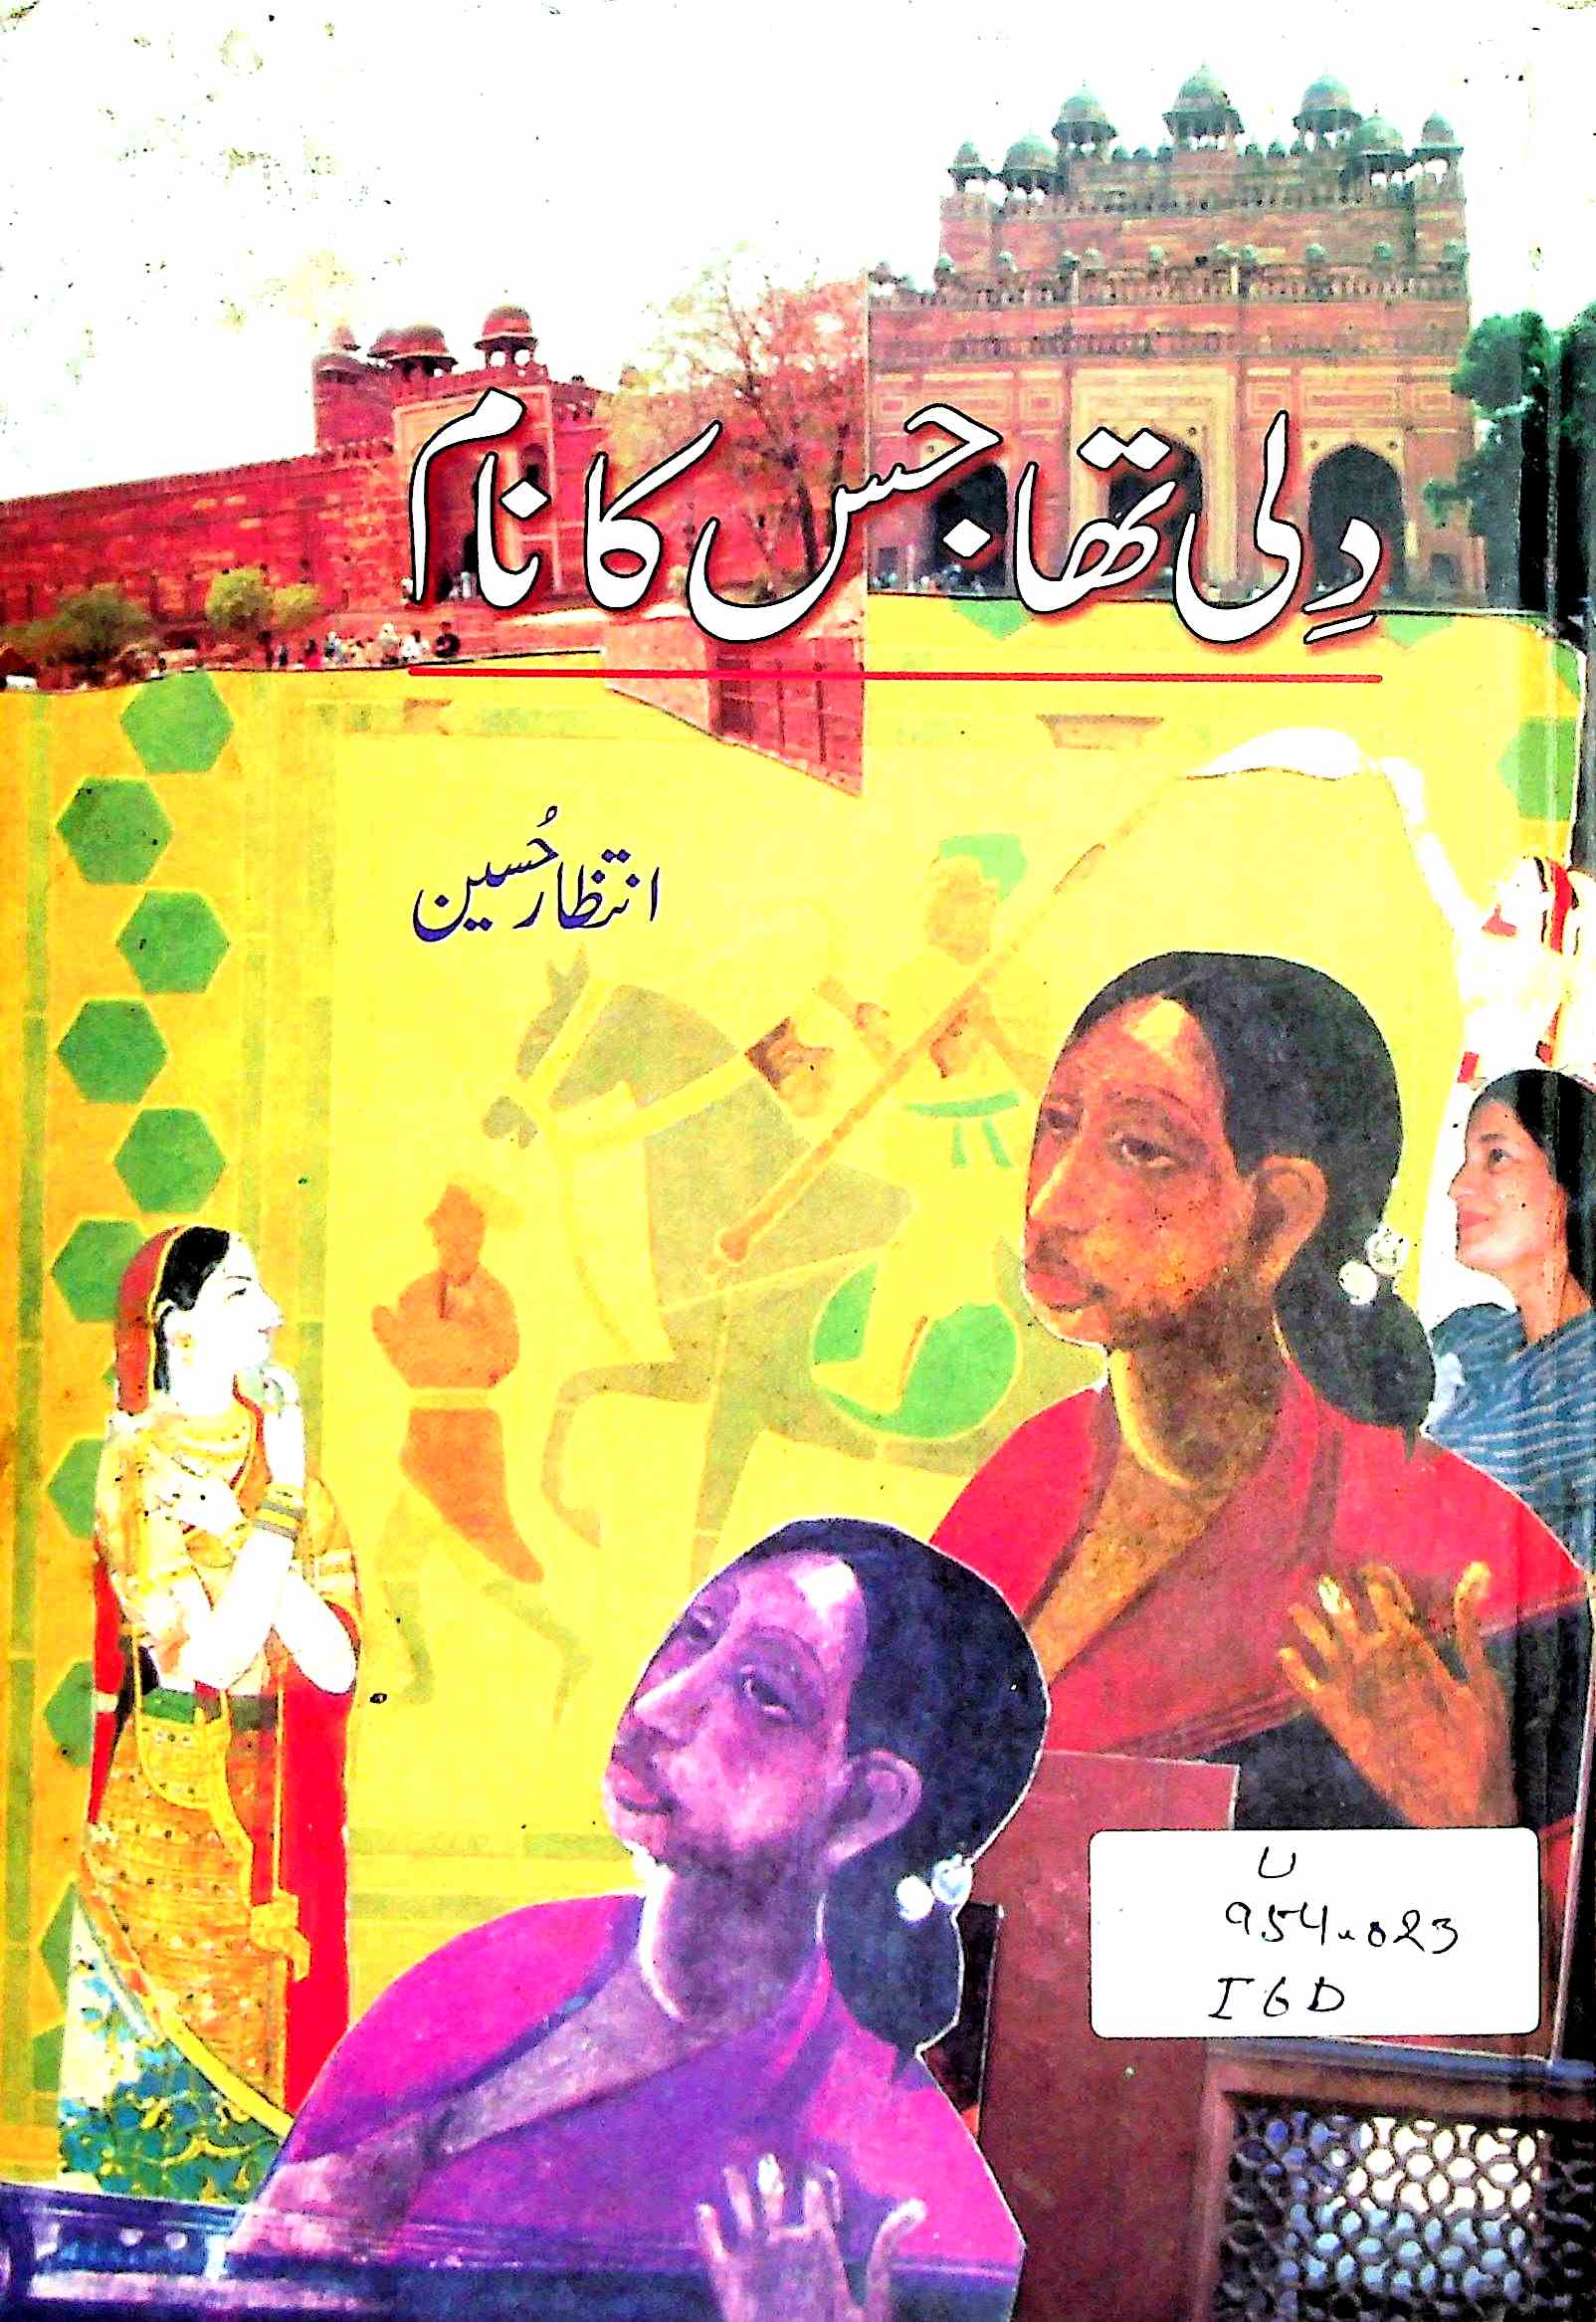 Binder Meaning In Urdu, Jild Saaz جلد ساز